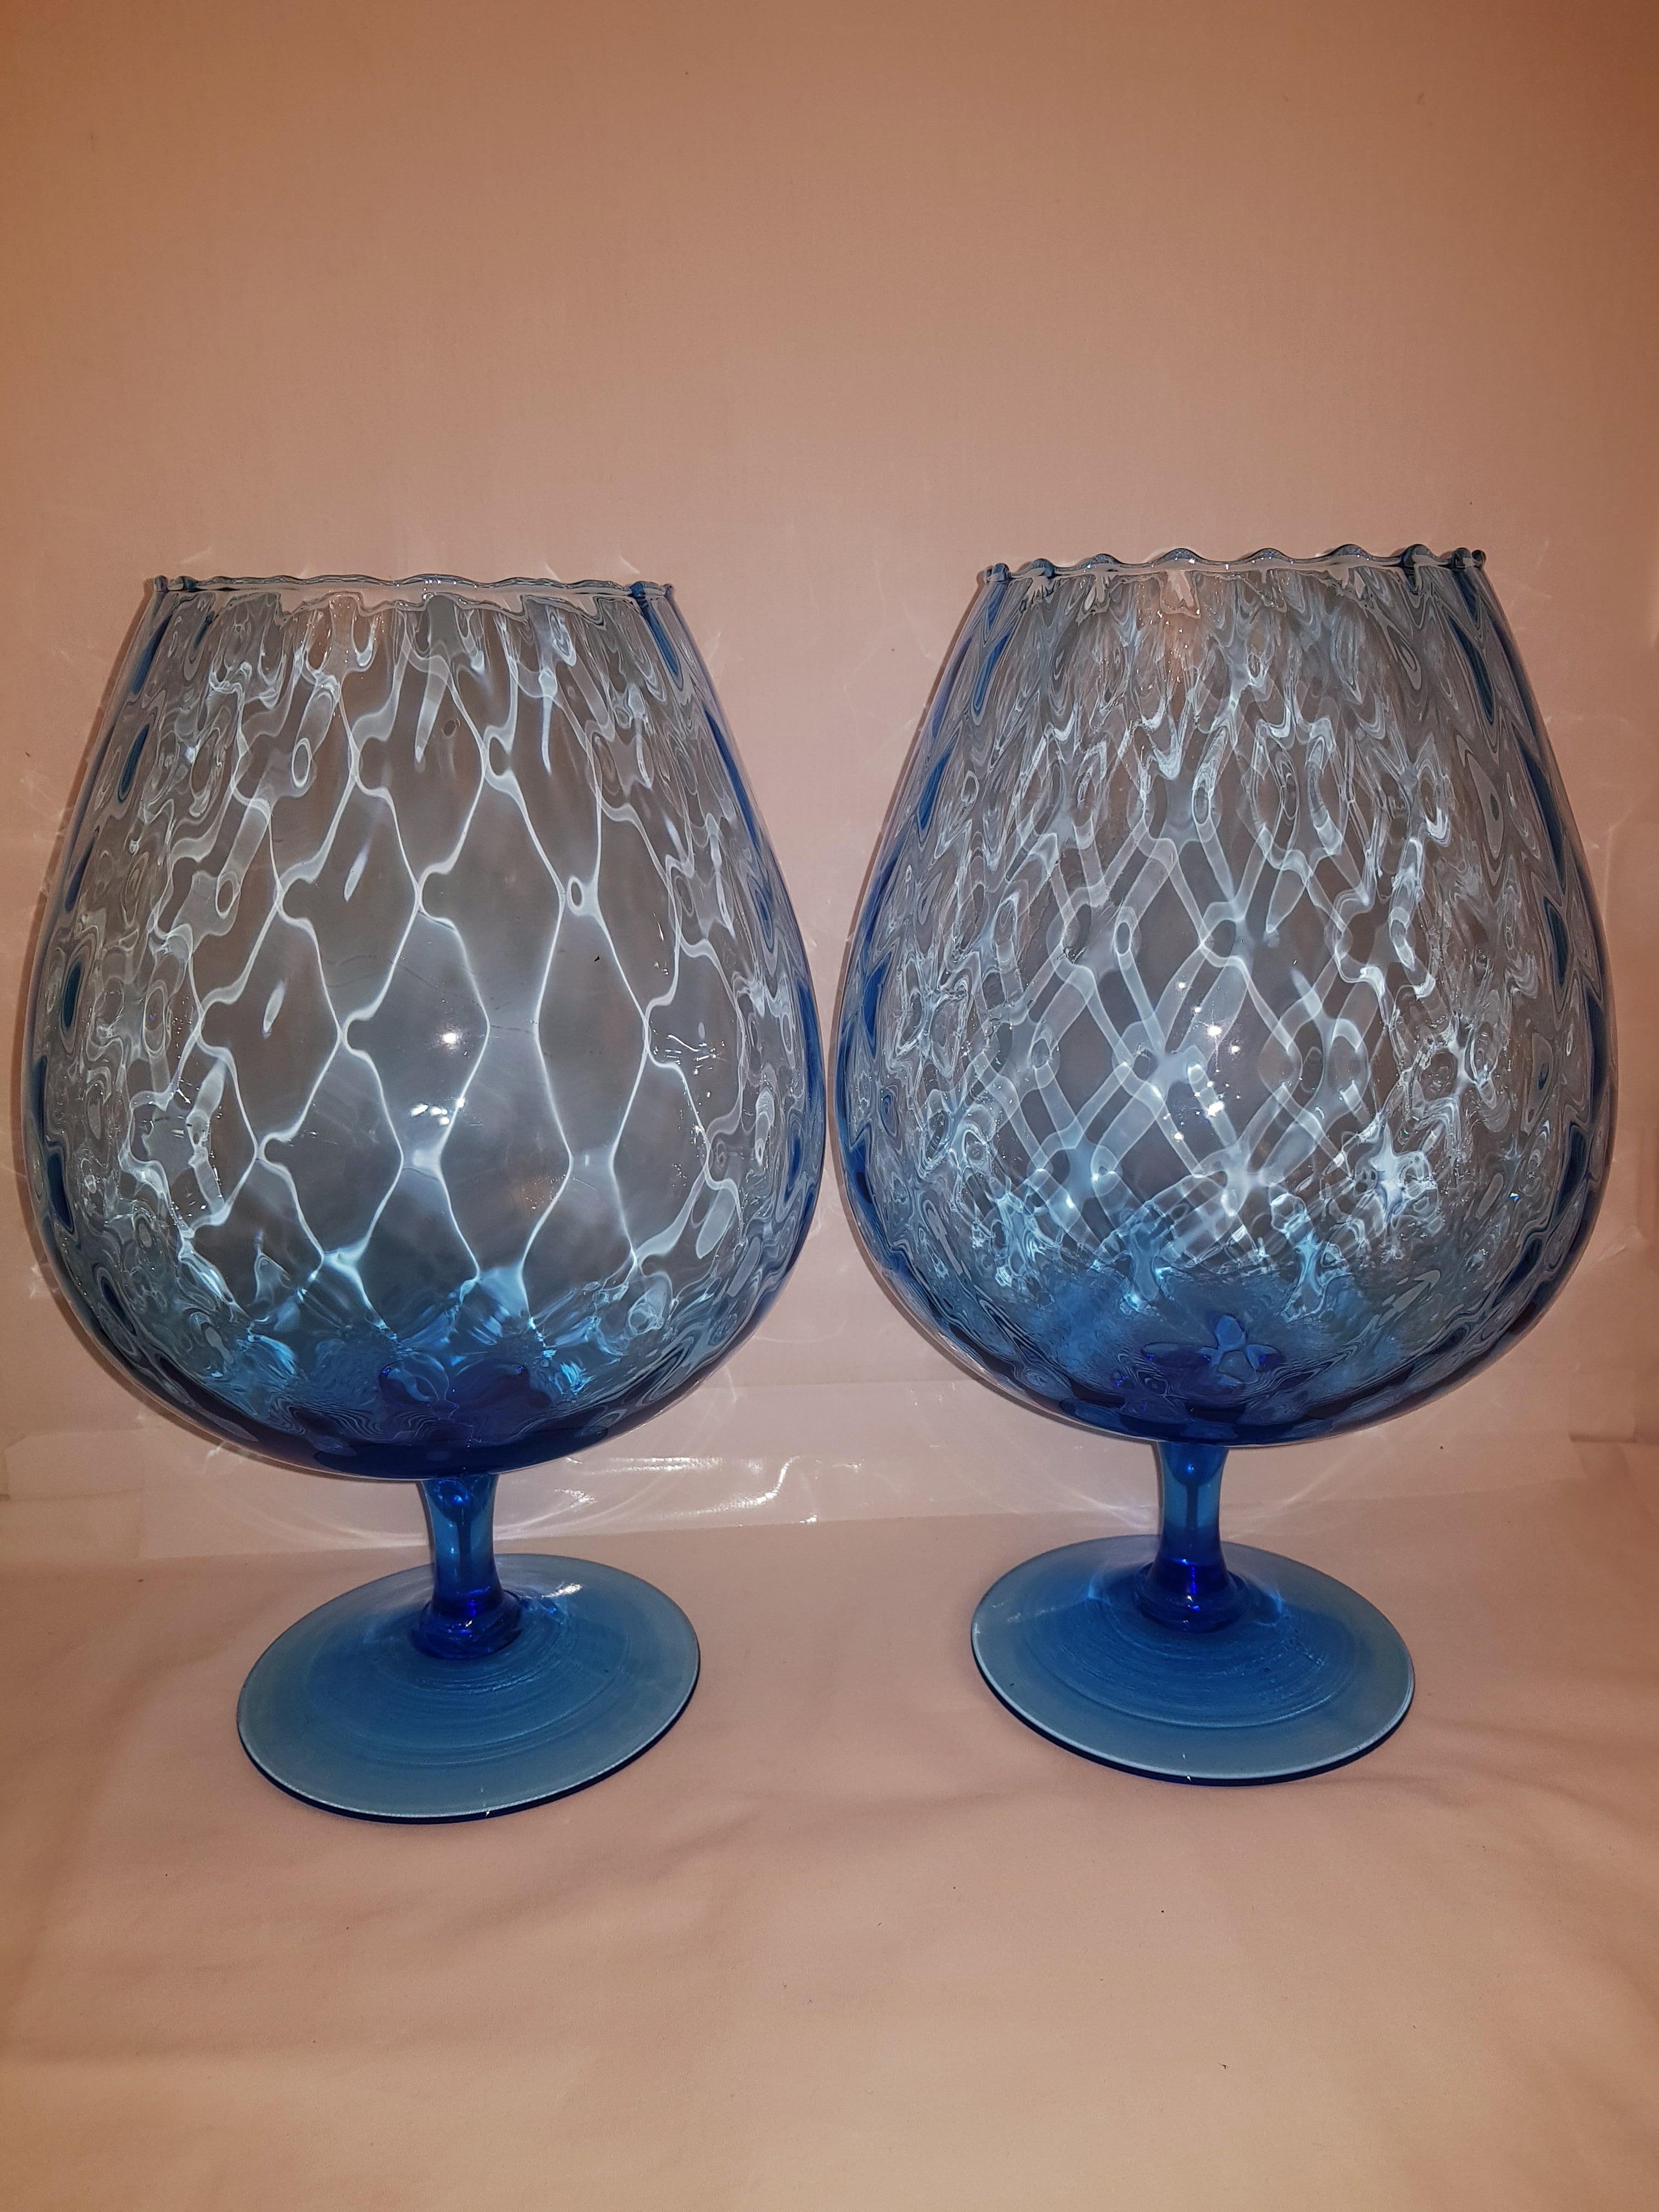 Beautiful vitange Empoli optical glasses, very large, decorative glasses, blue colour, brilliant condition.